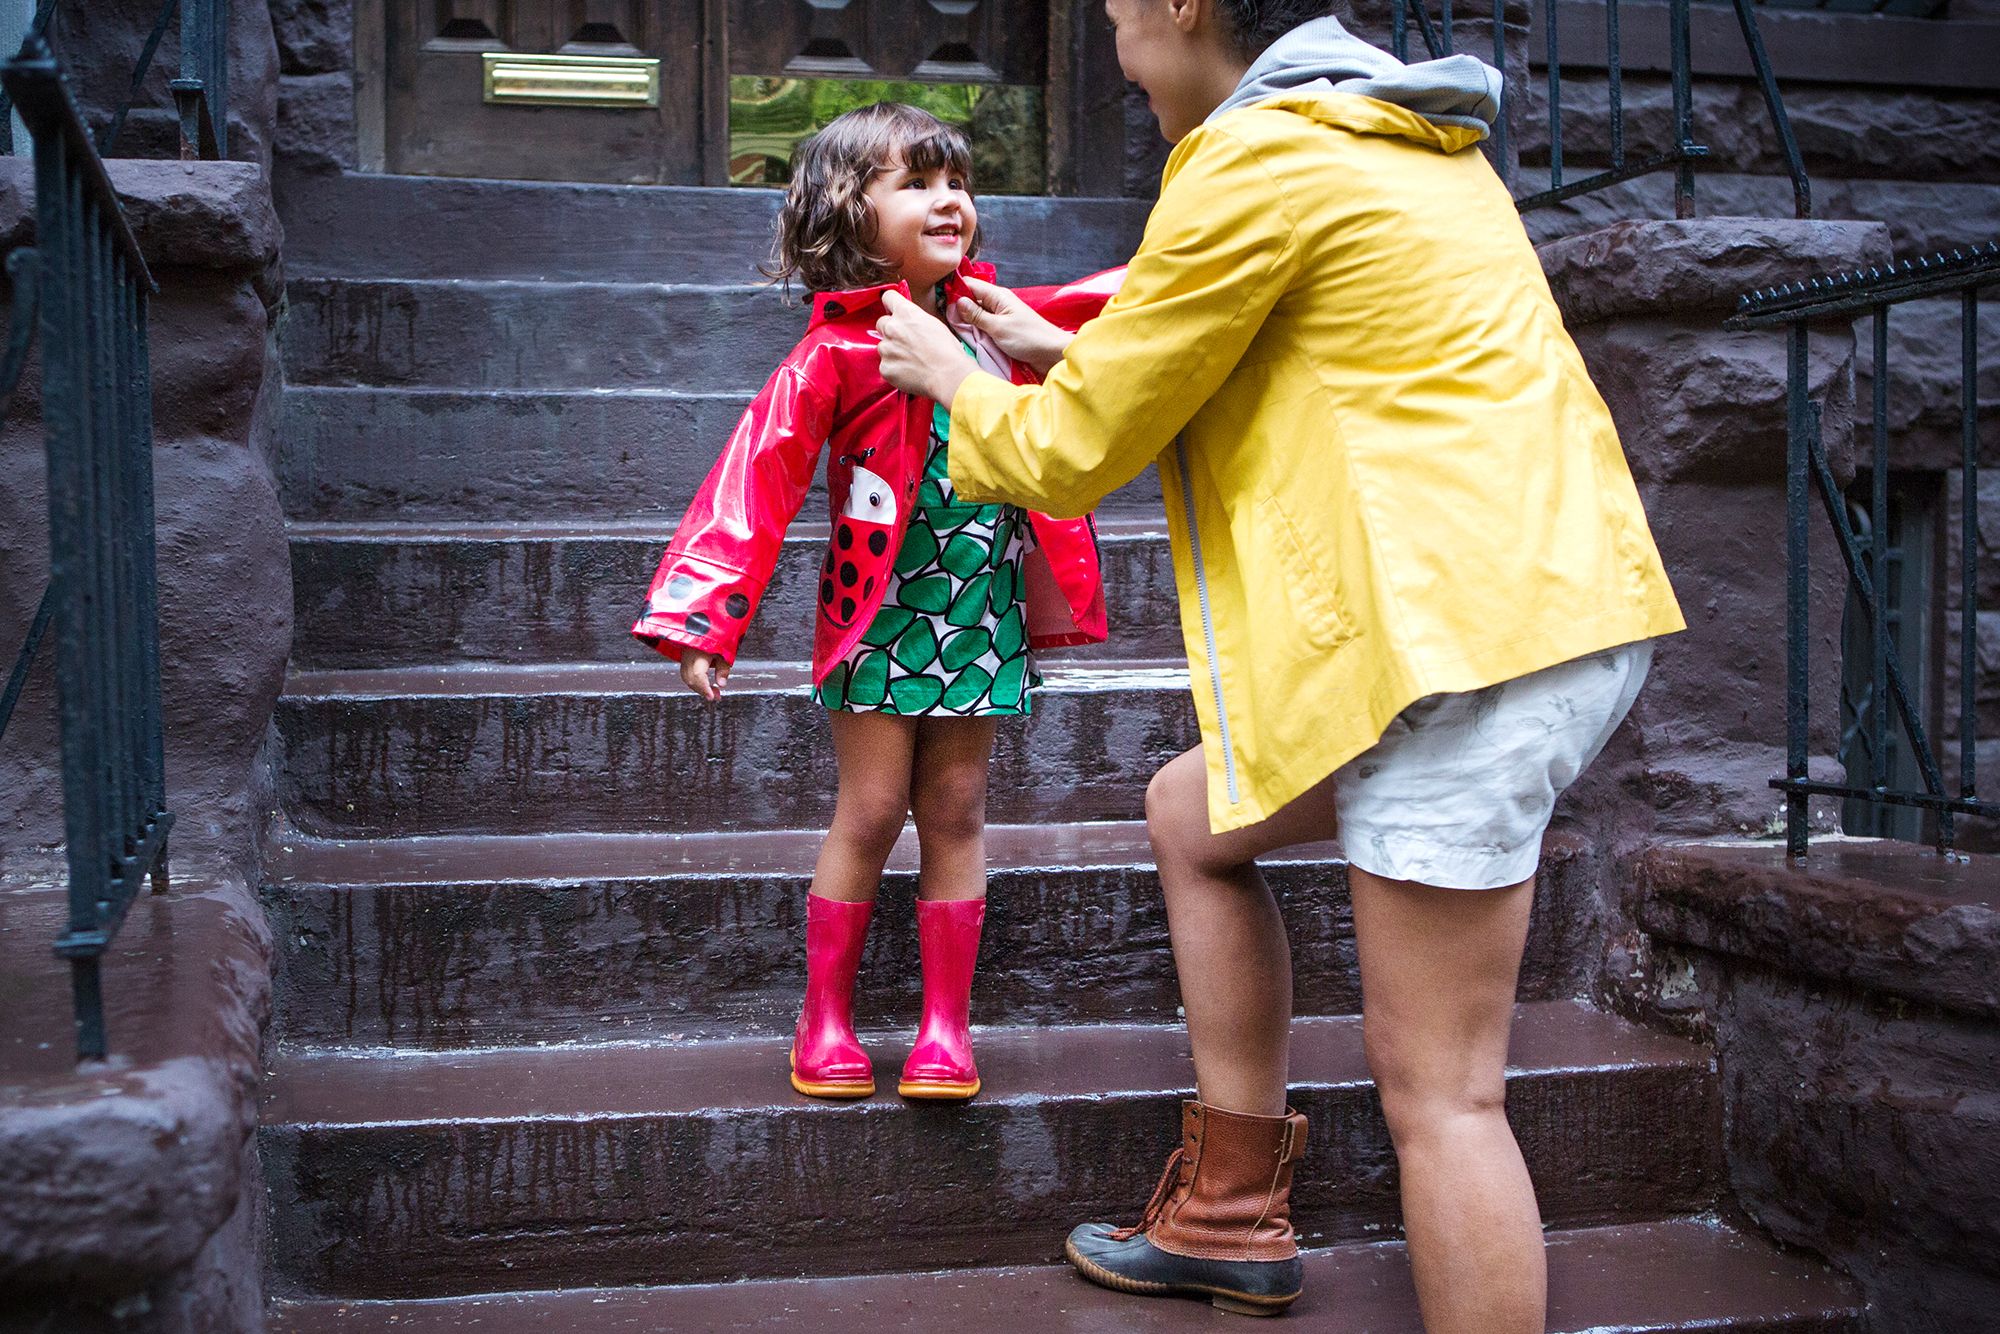 Hooded | Kids One Size Fits All Waterproof 100% Waterproof Material EUROXANTY Childrens Raincoat Rain Jacket 